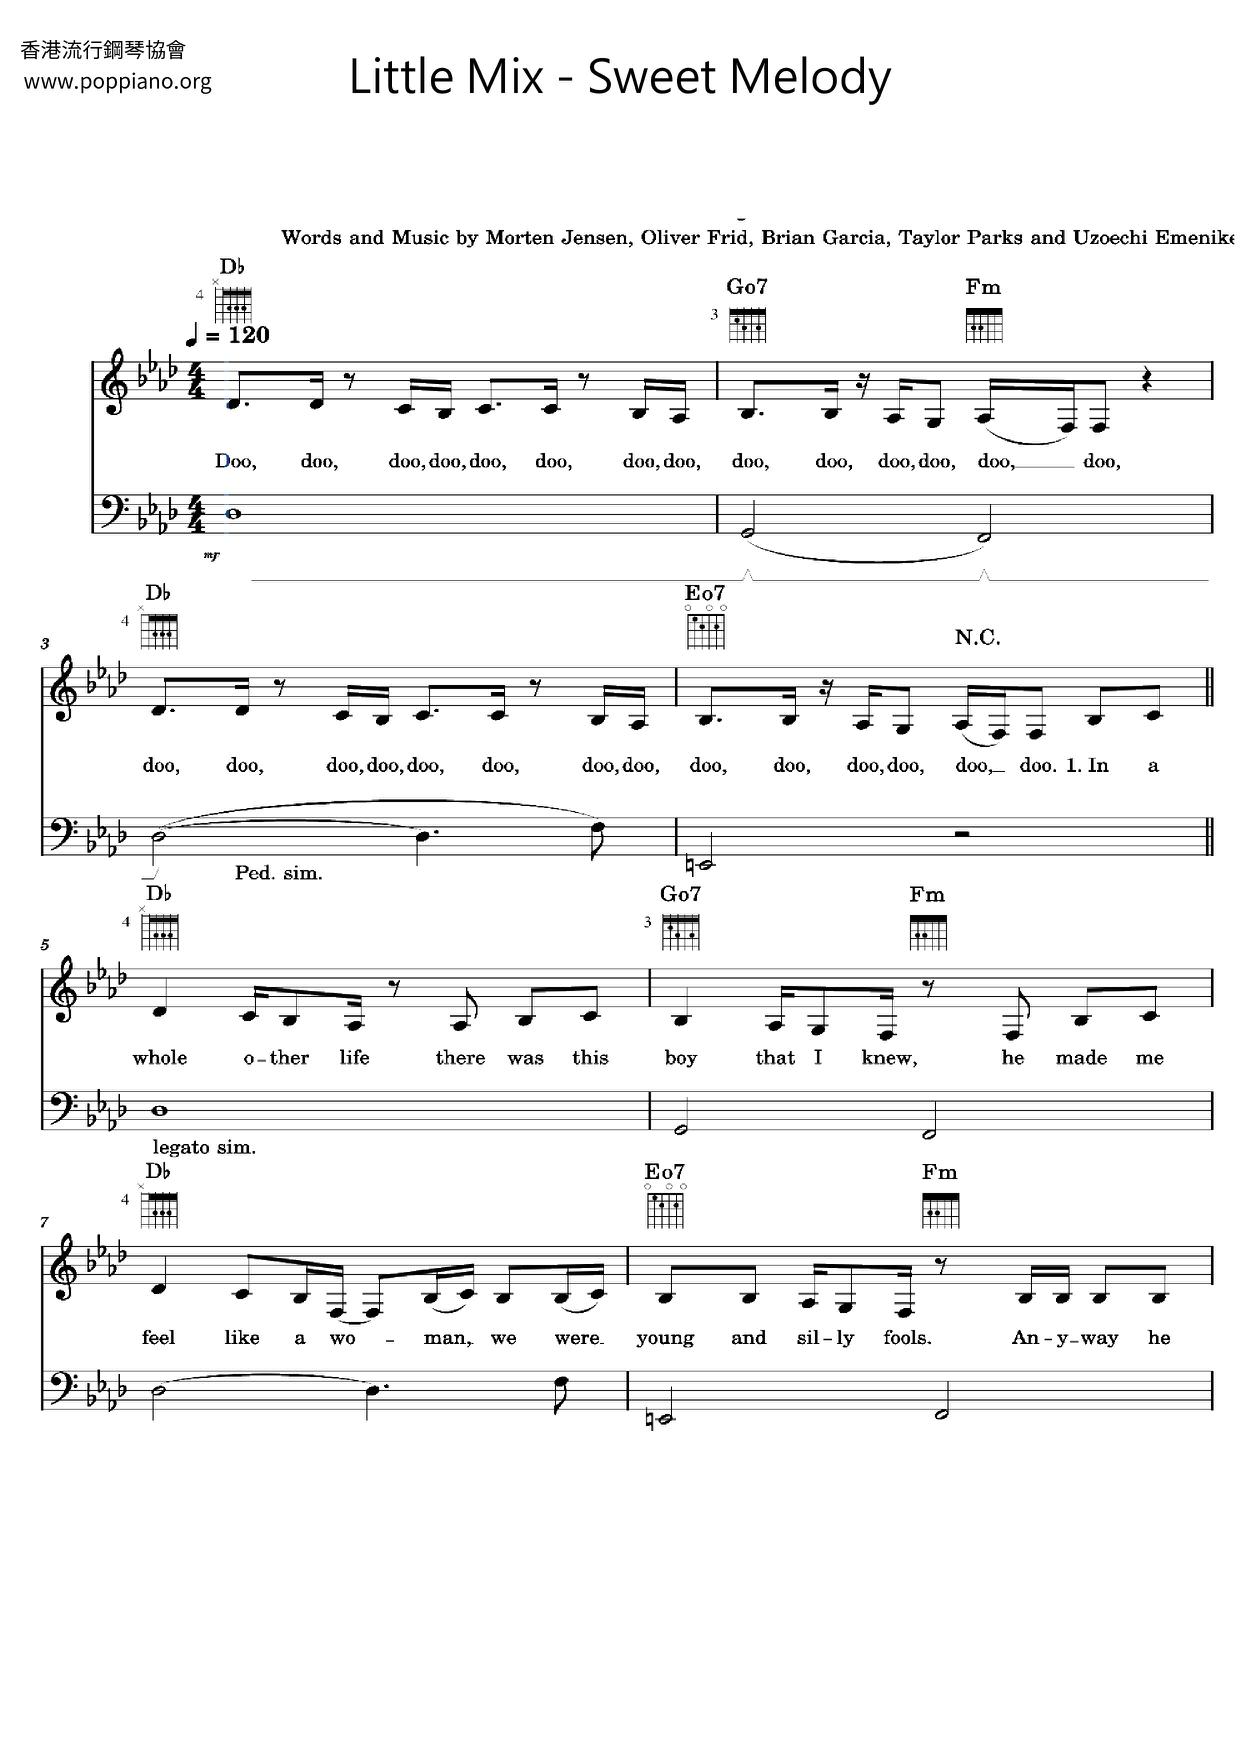 Sweet Melody Score